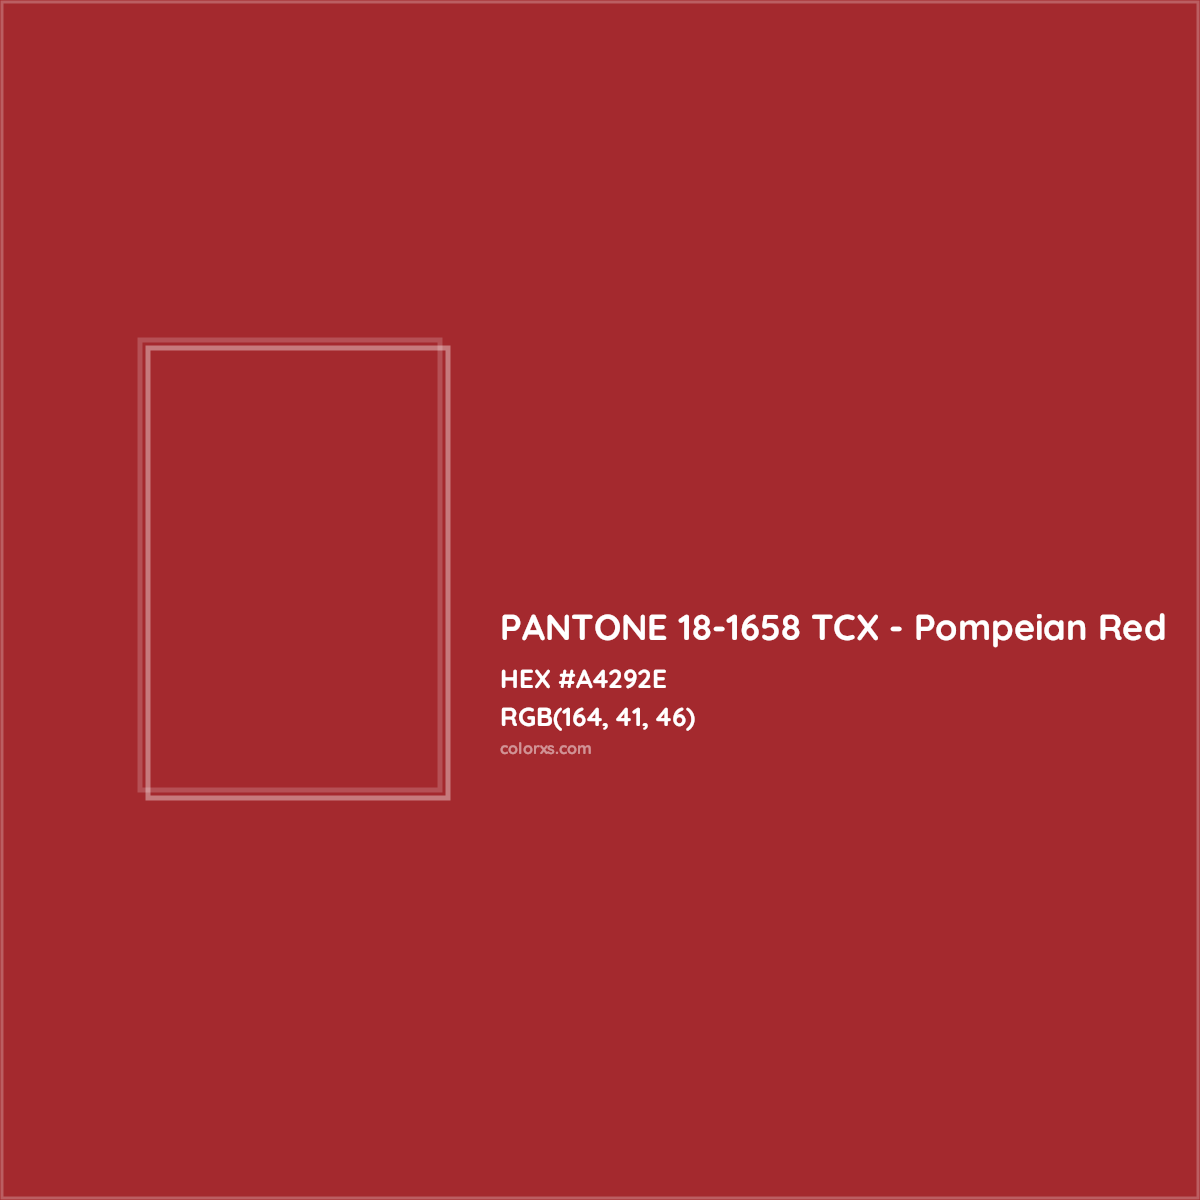 HEX #A4292E PANTONE 18-1658 TCX - Pompeian Red CMS Pantone TCX - Color Code